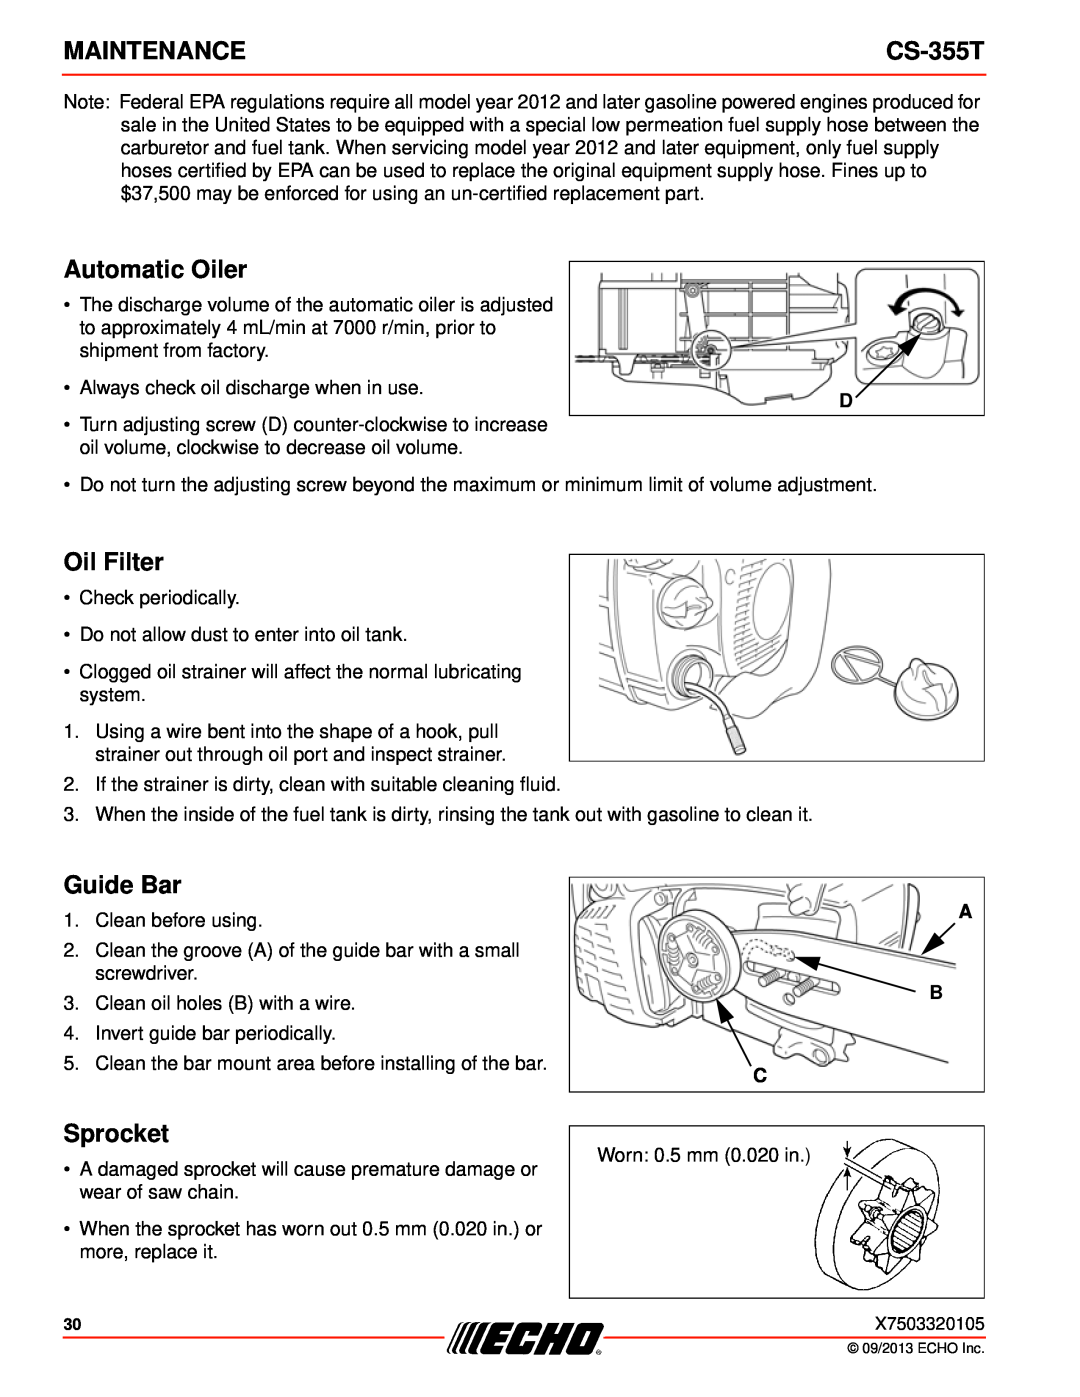 Echo CS-355T instruction manual Automatic Oiler, Oil Filter, Sprocket, A B C, Maintenance, Guide Bar 